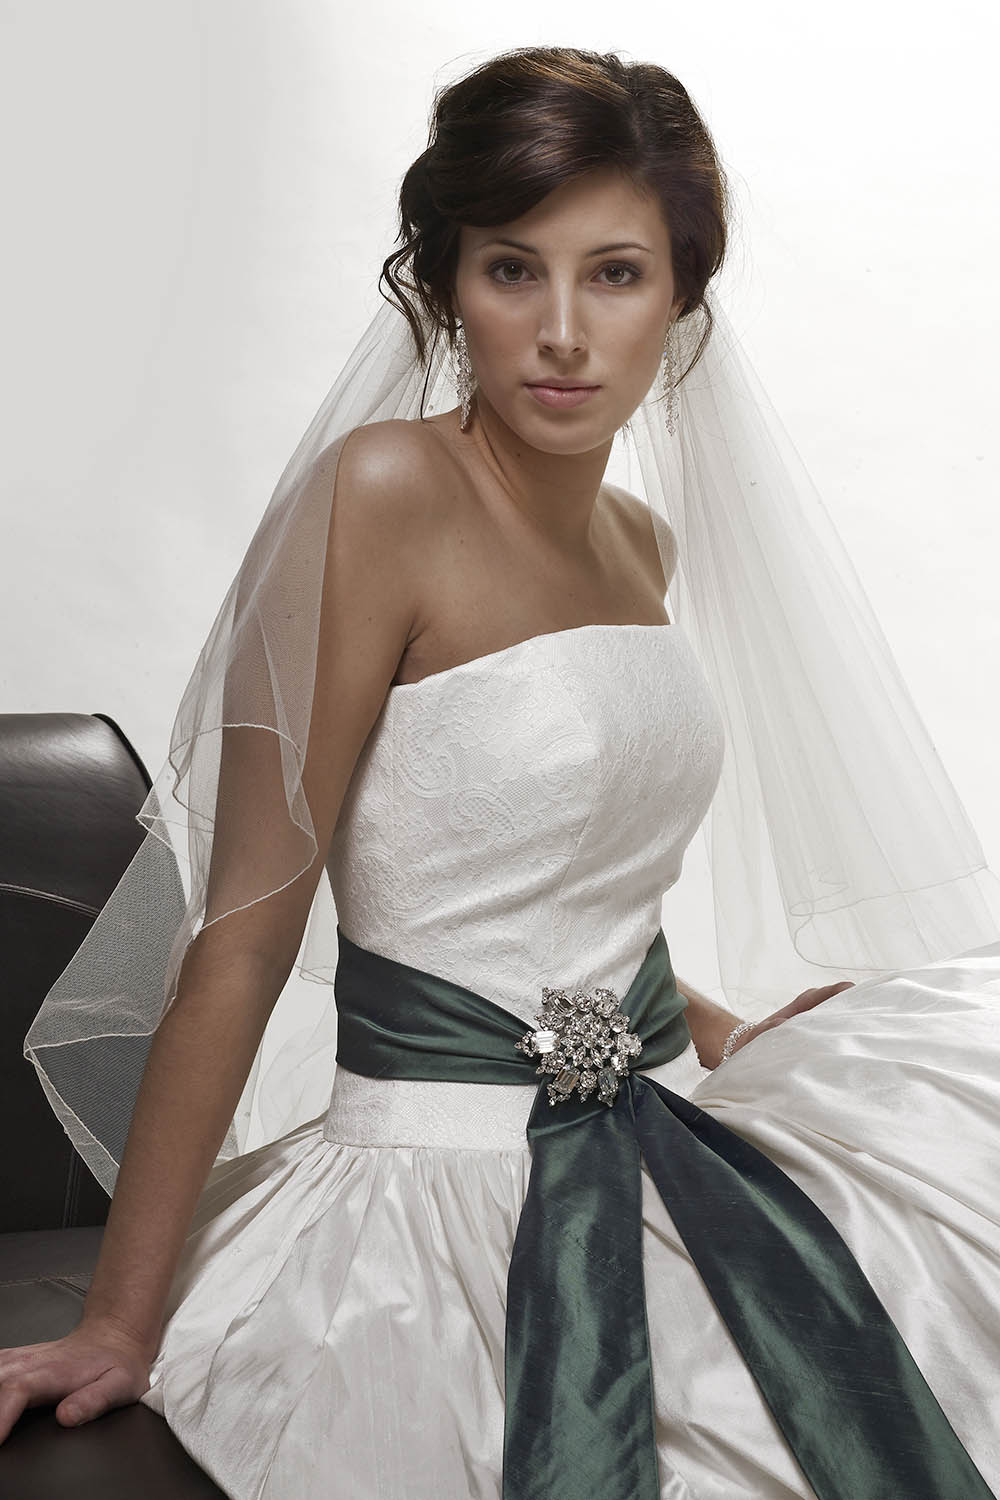 Bridal veil shown with wedding dress